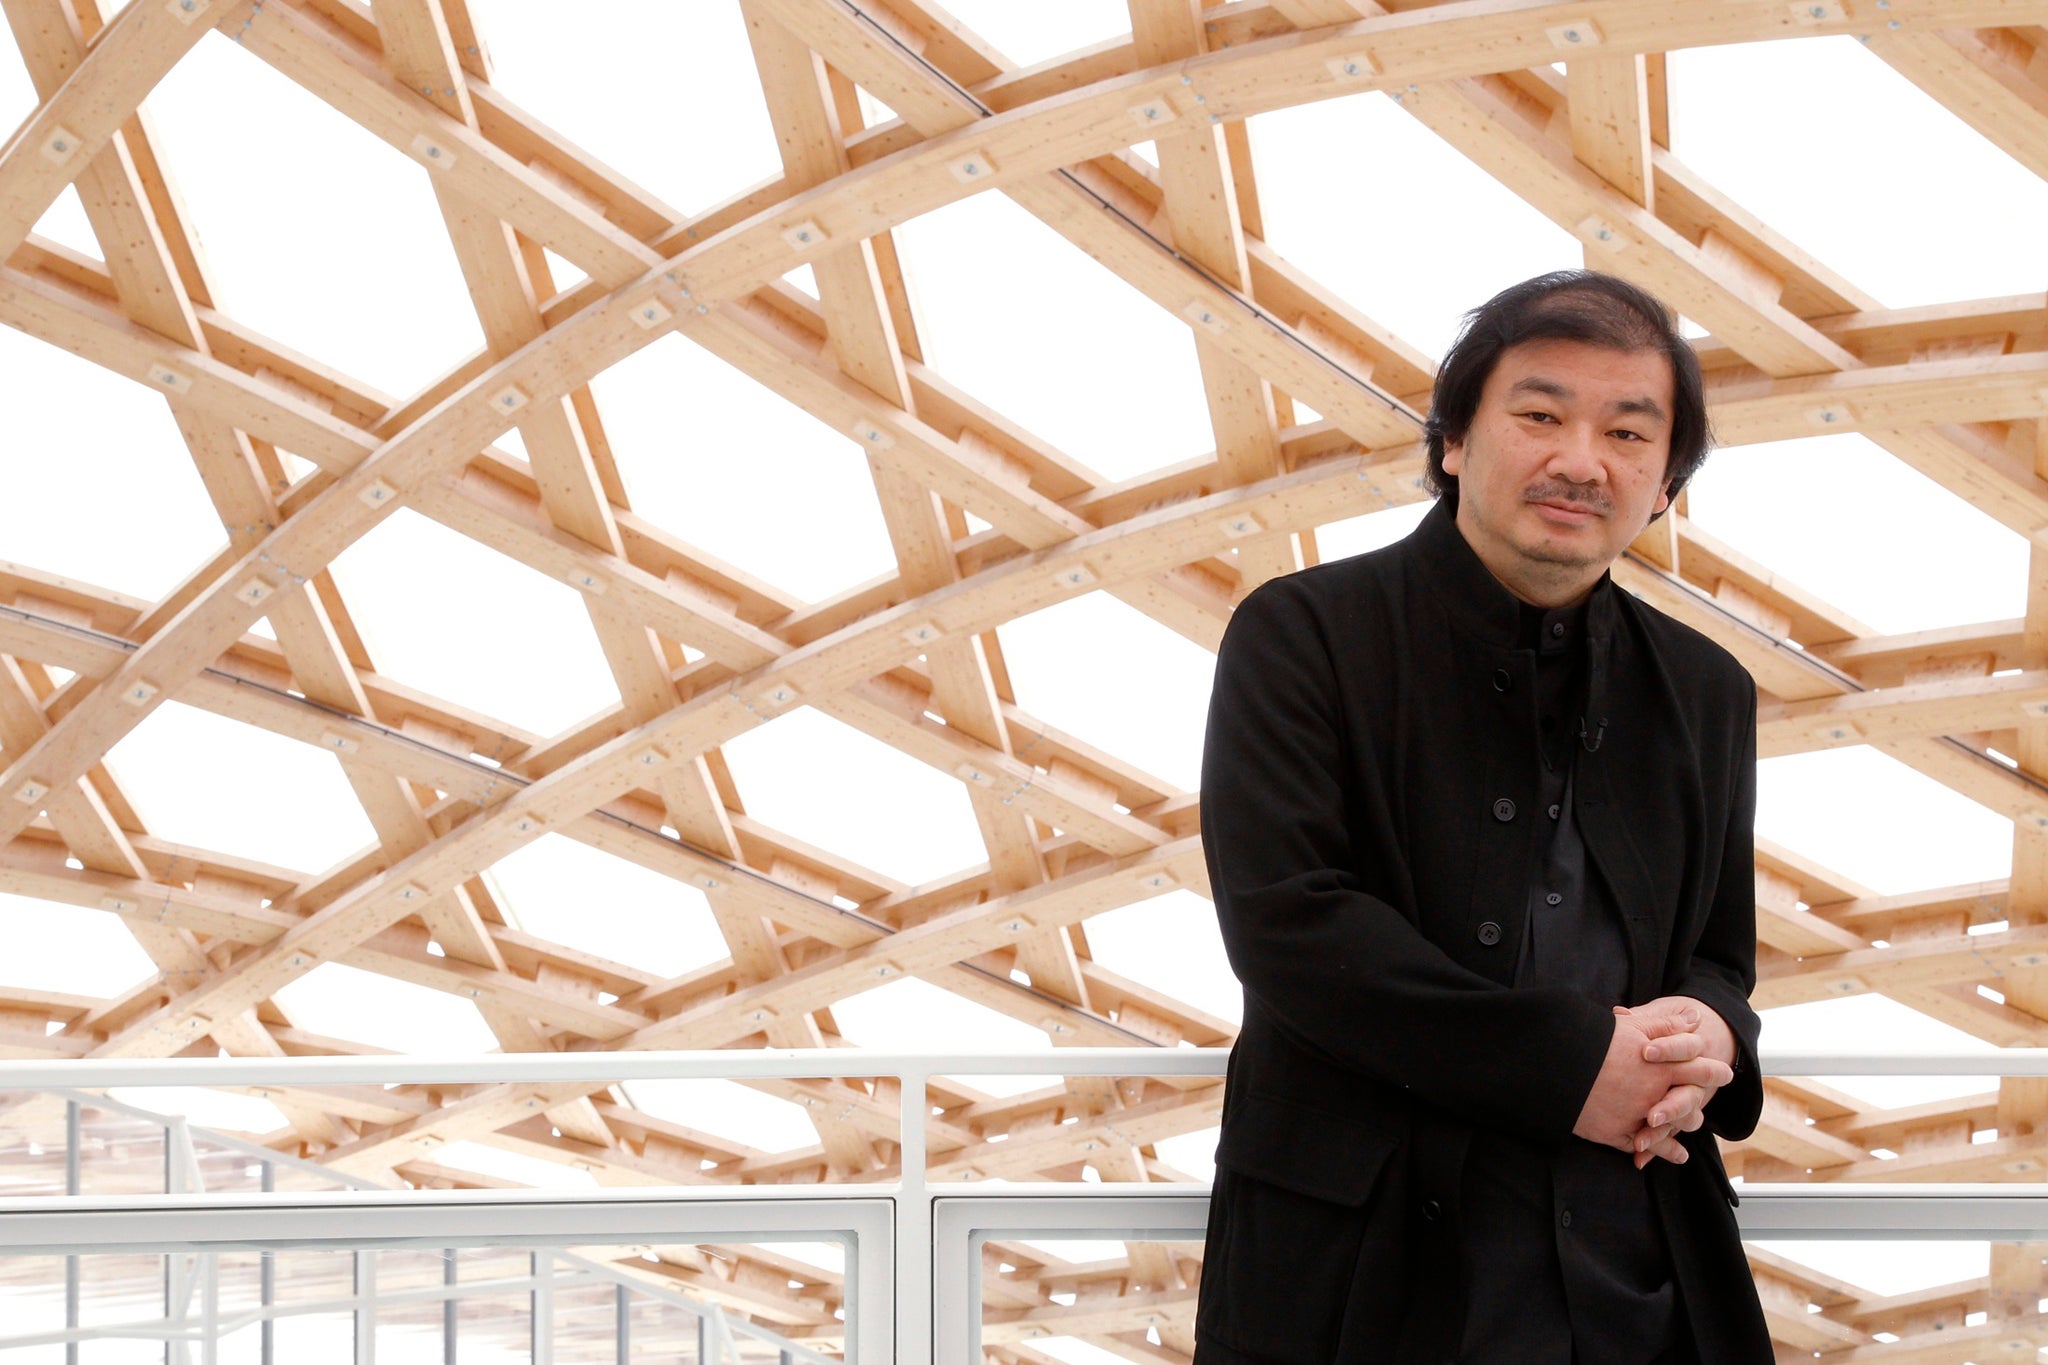 Architect Shigeru Ban has been awarded the 2014 Pritzker prize